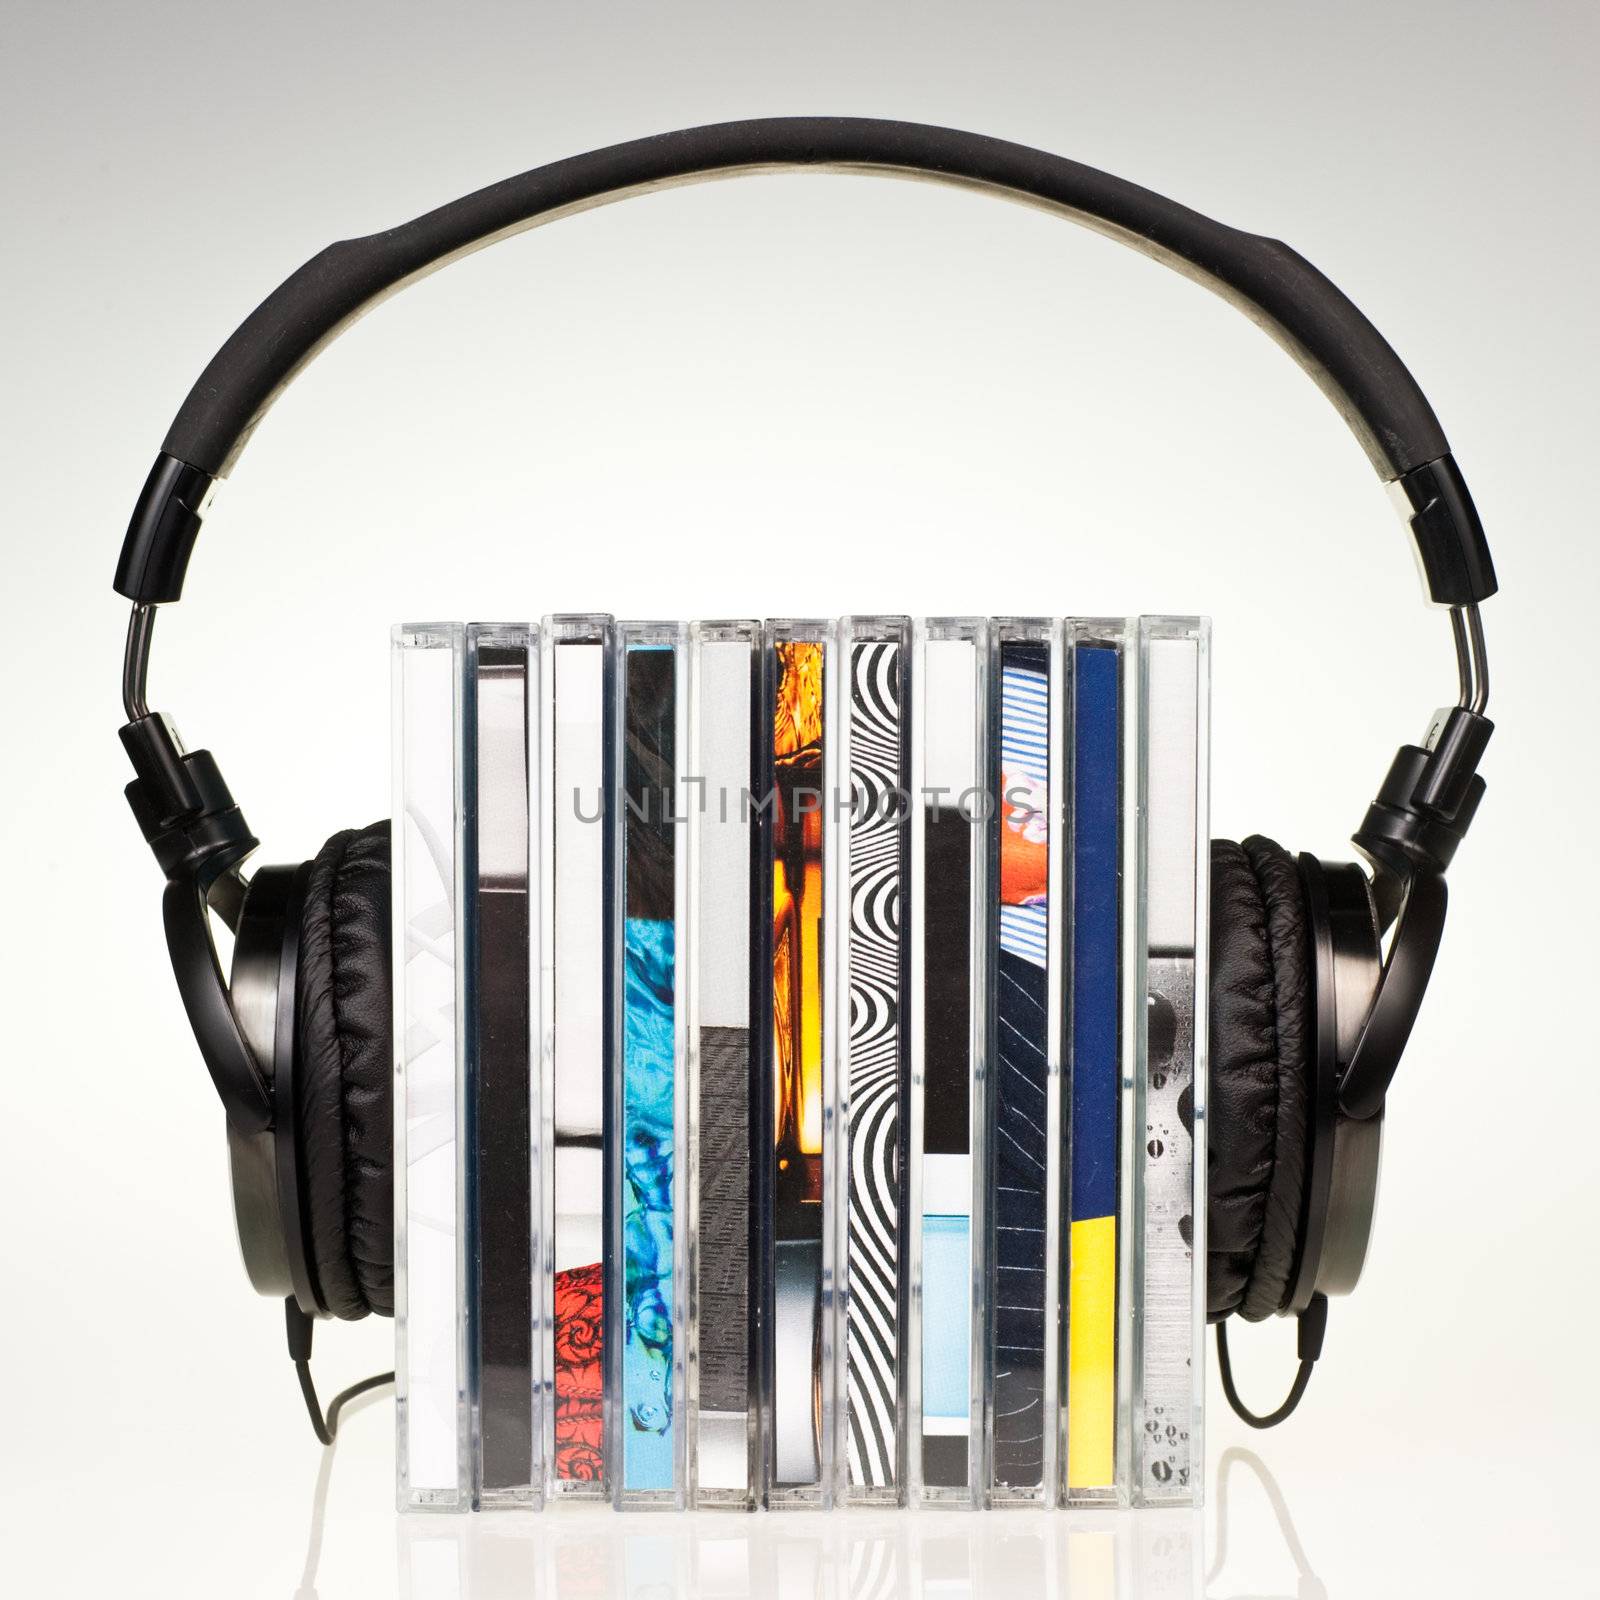 HI-Fi headphones on stack of CDs